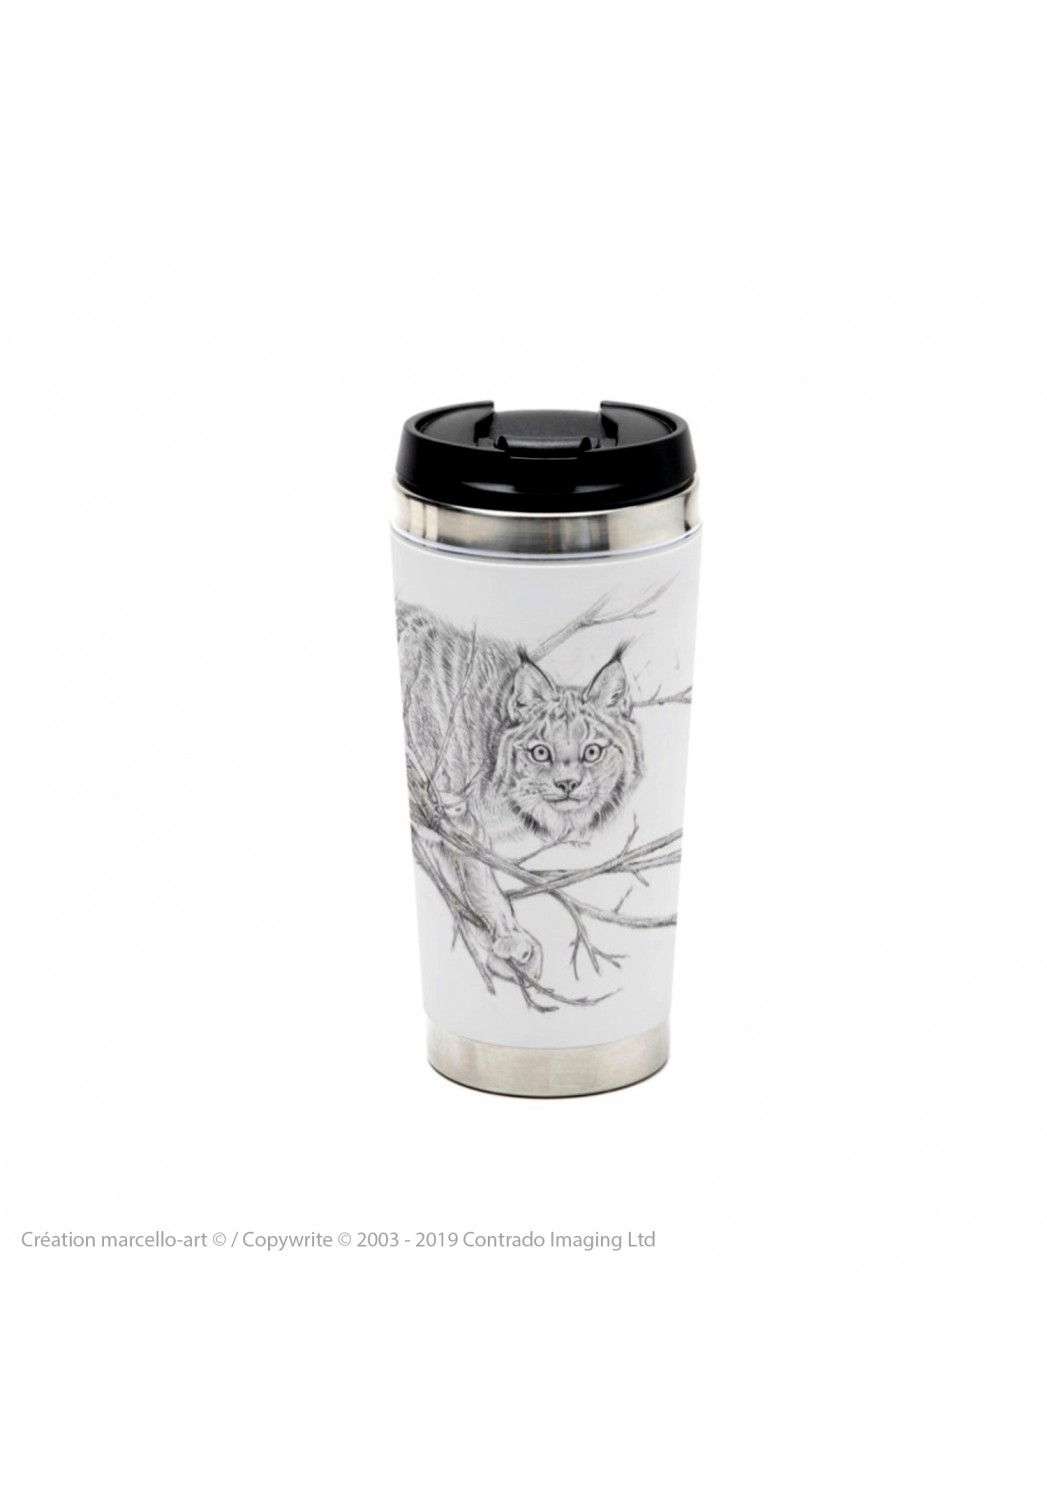 Marcello-art: Decoration accessoiries Thermos mug 393 lynx